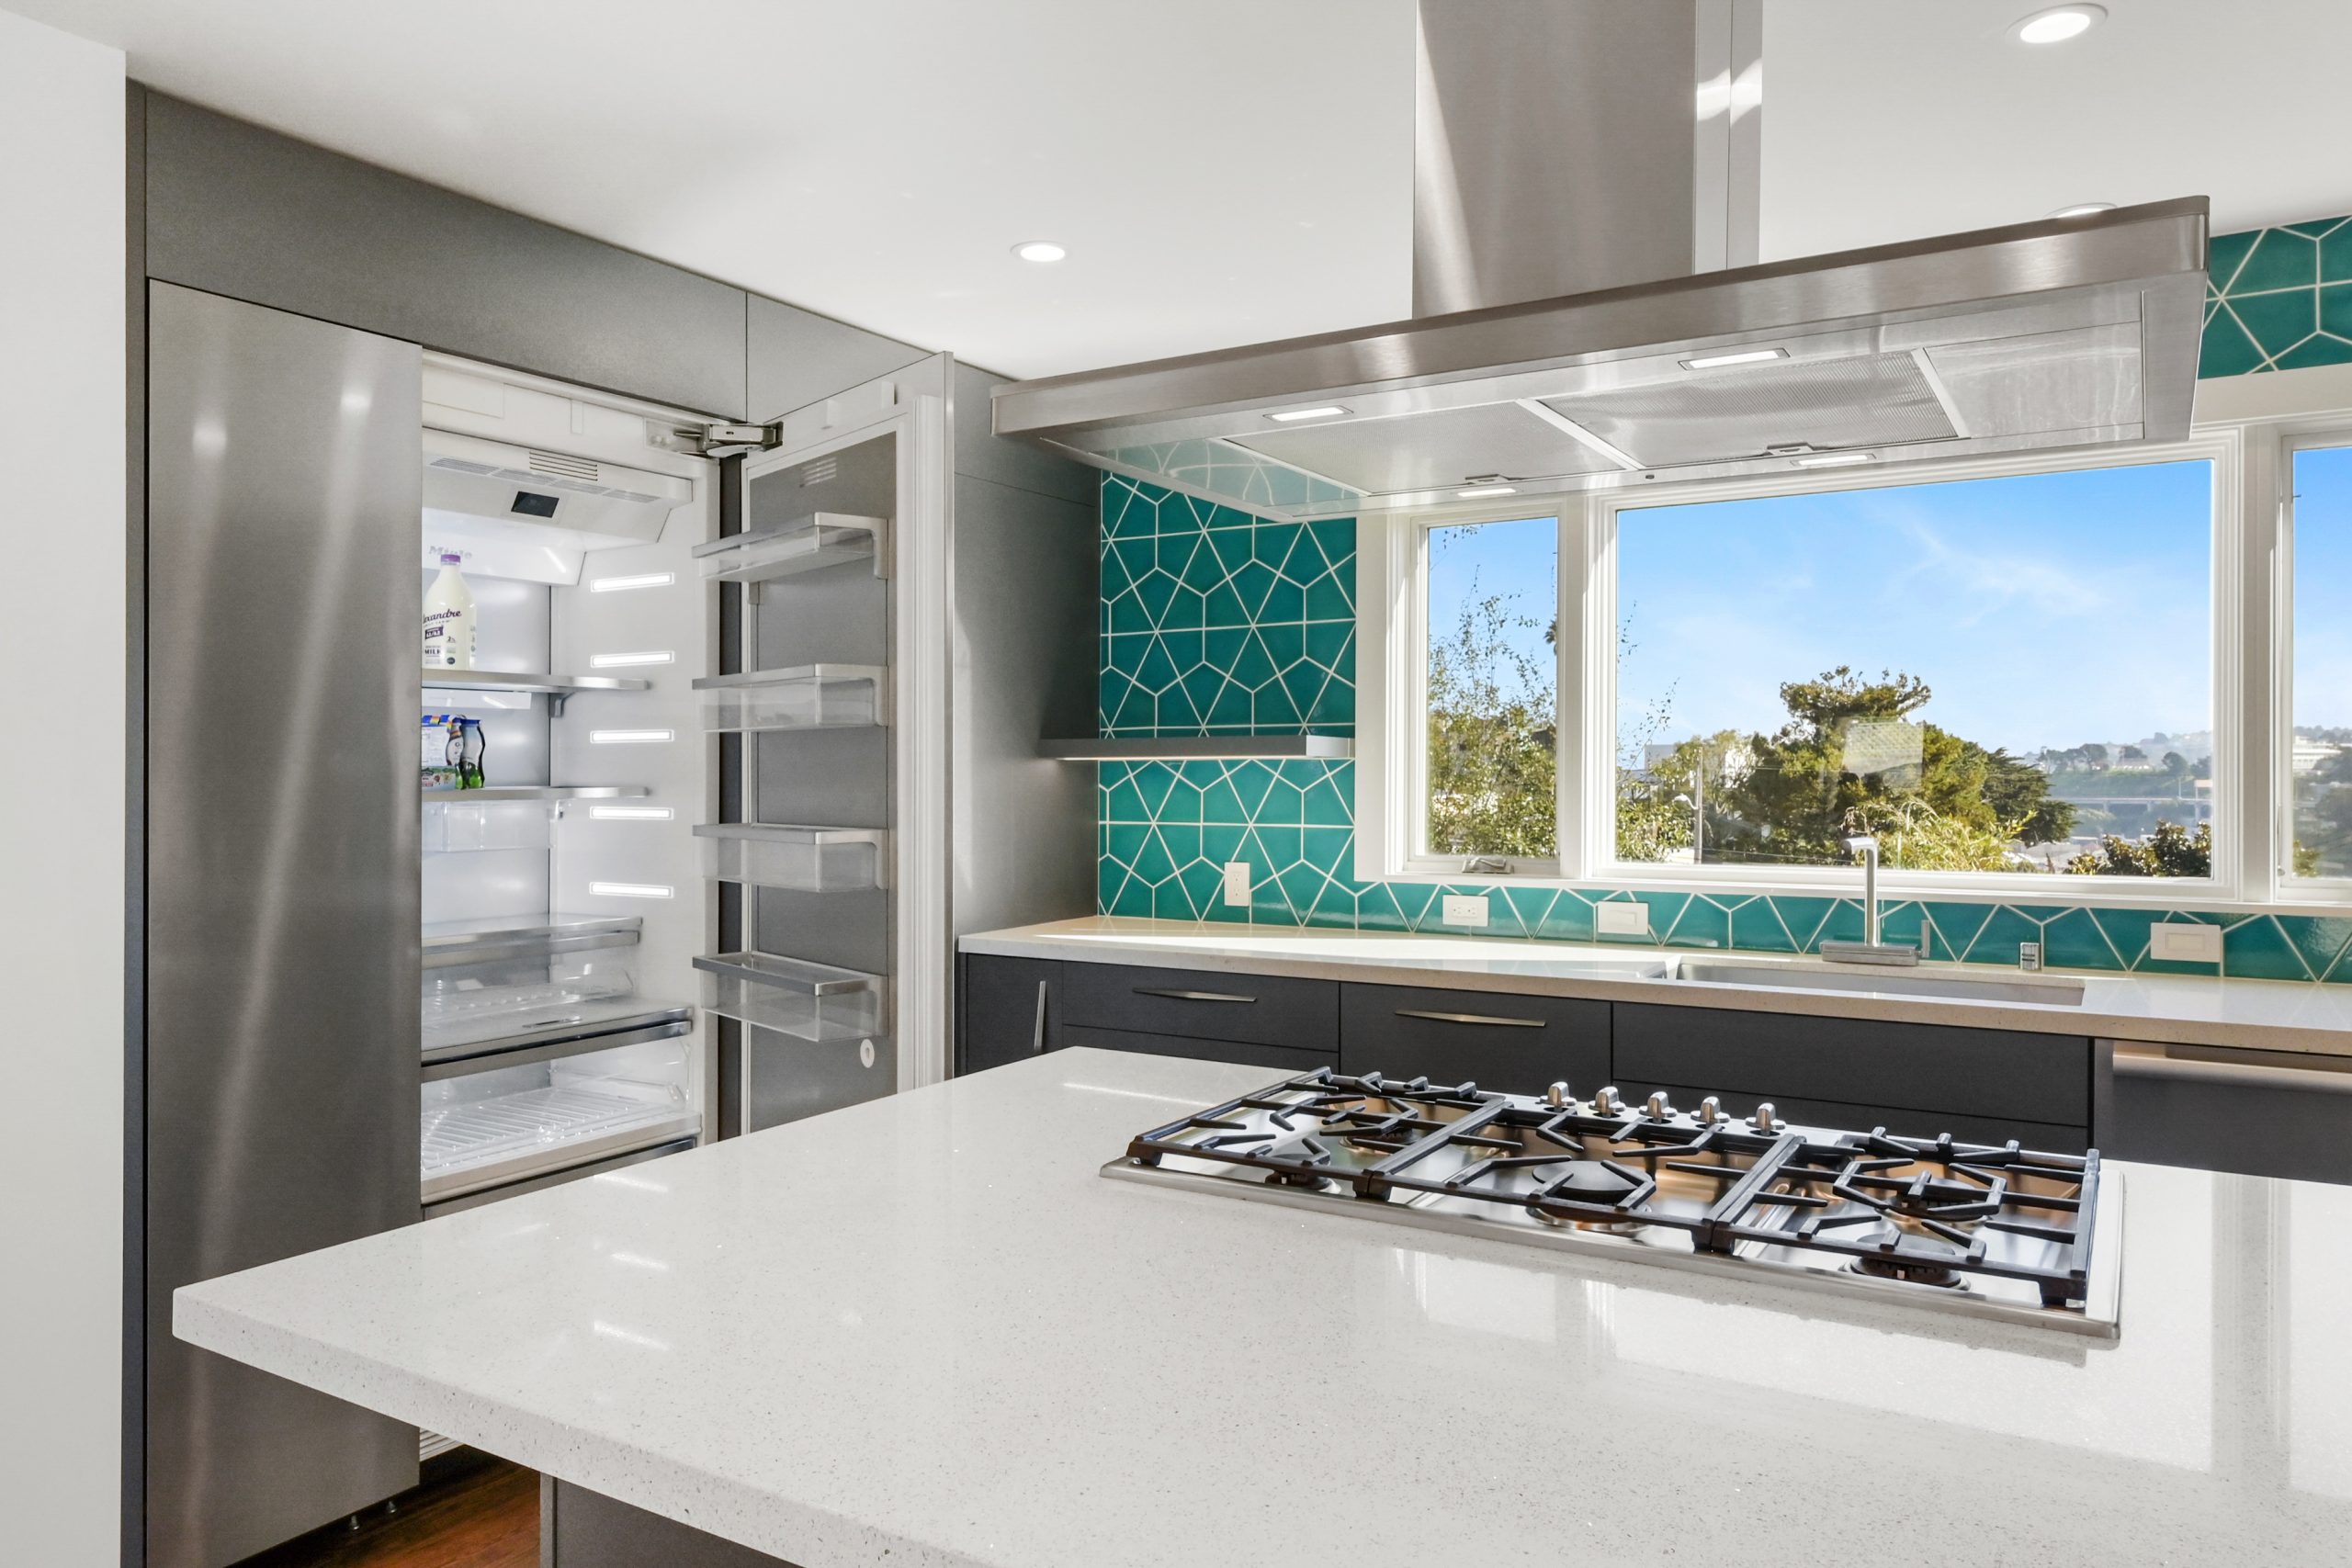 stainless steel fridge in a modern kitchen